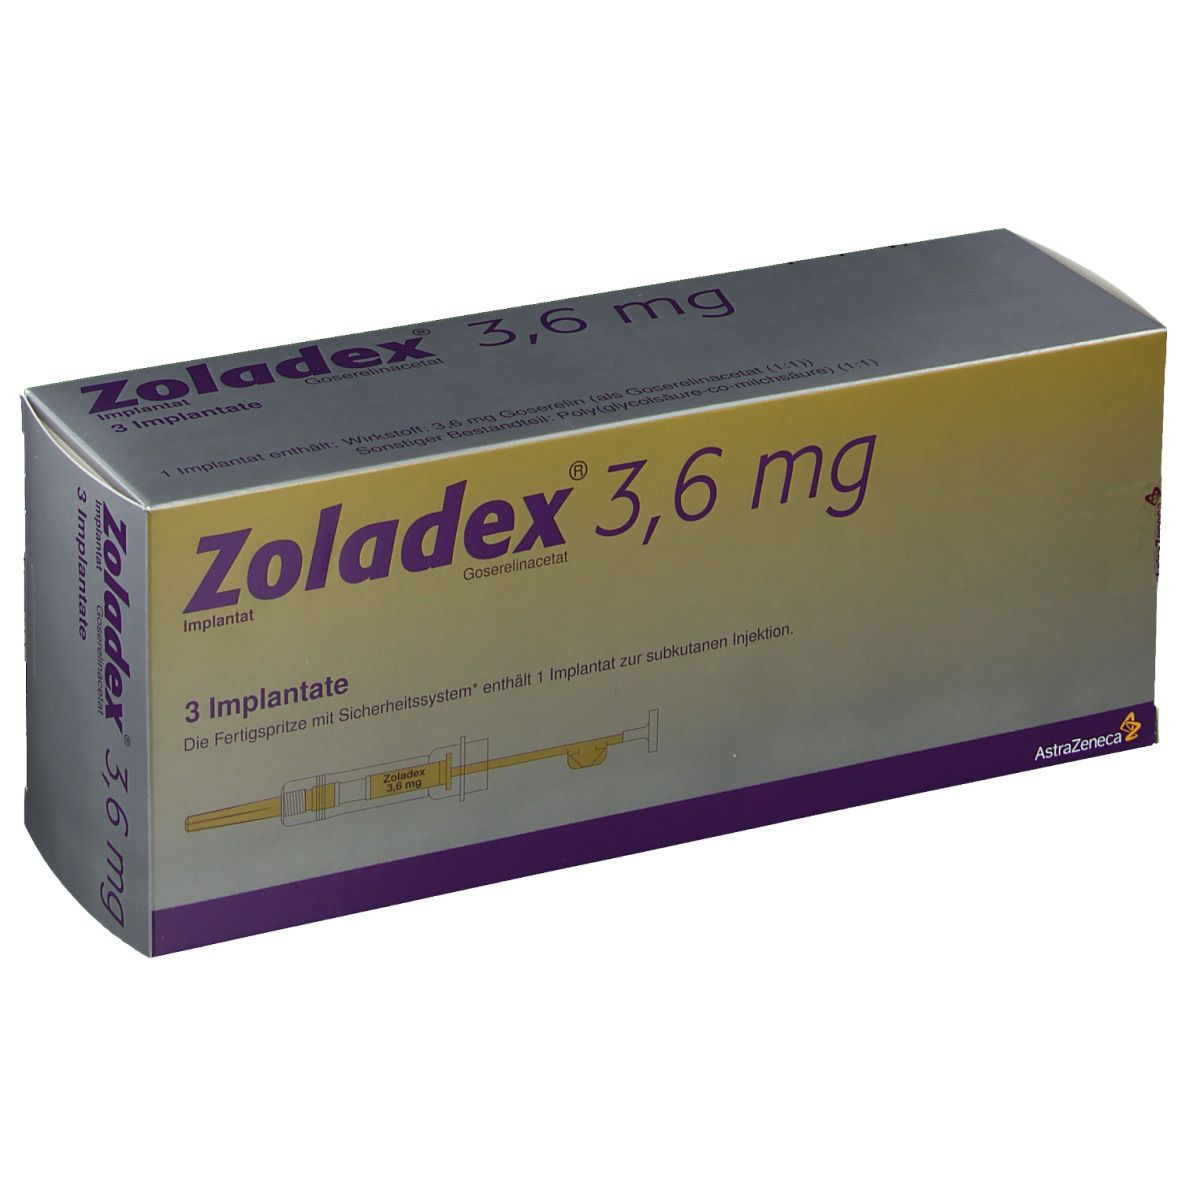 Zoladex® 3,6  mg